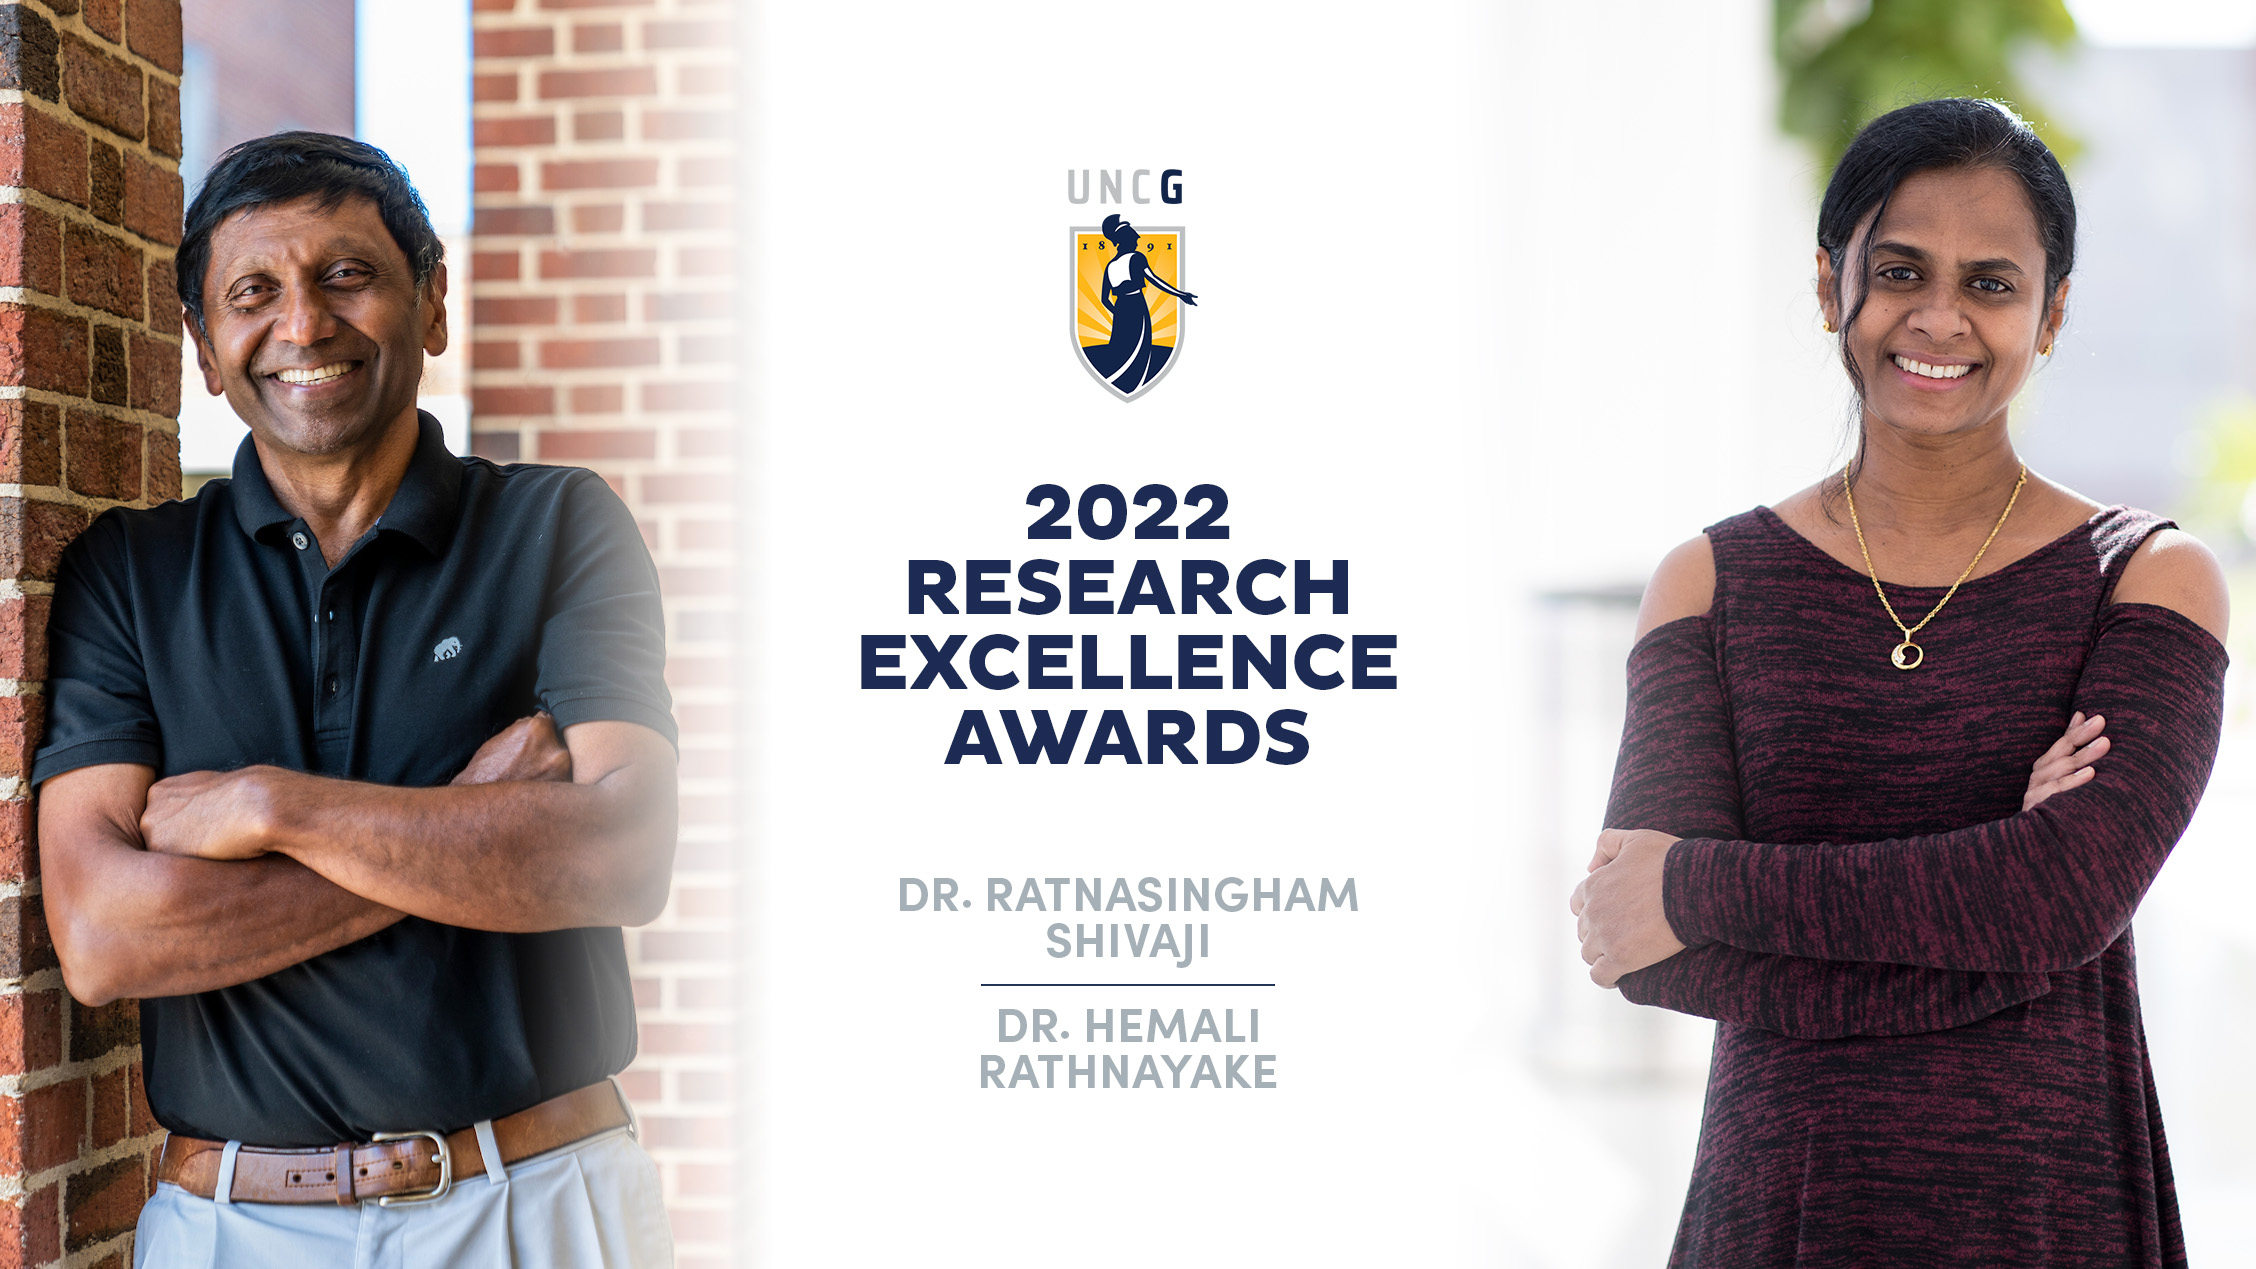 2022 research excellence award winners Dr. Ratnasingham Shivaji and Dr. Hemali Rathnayake.